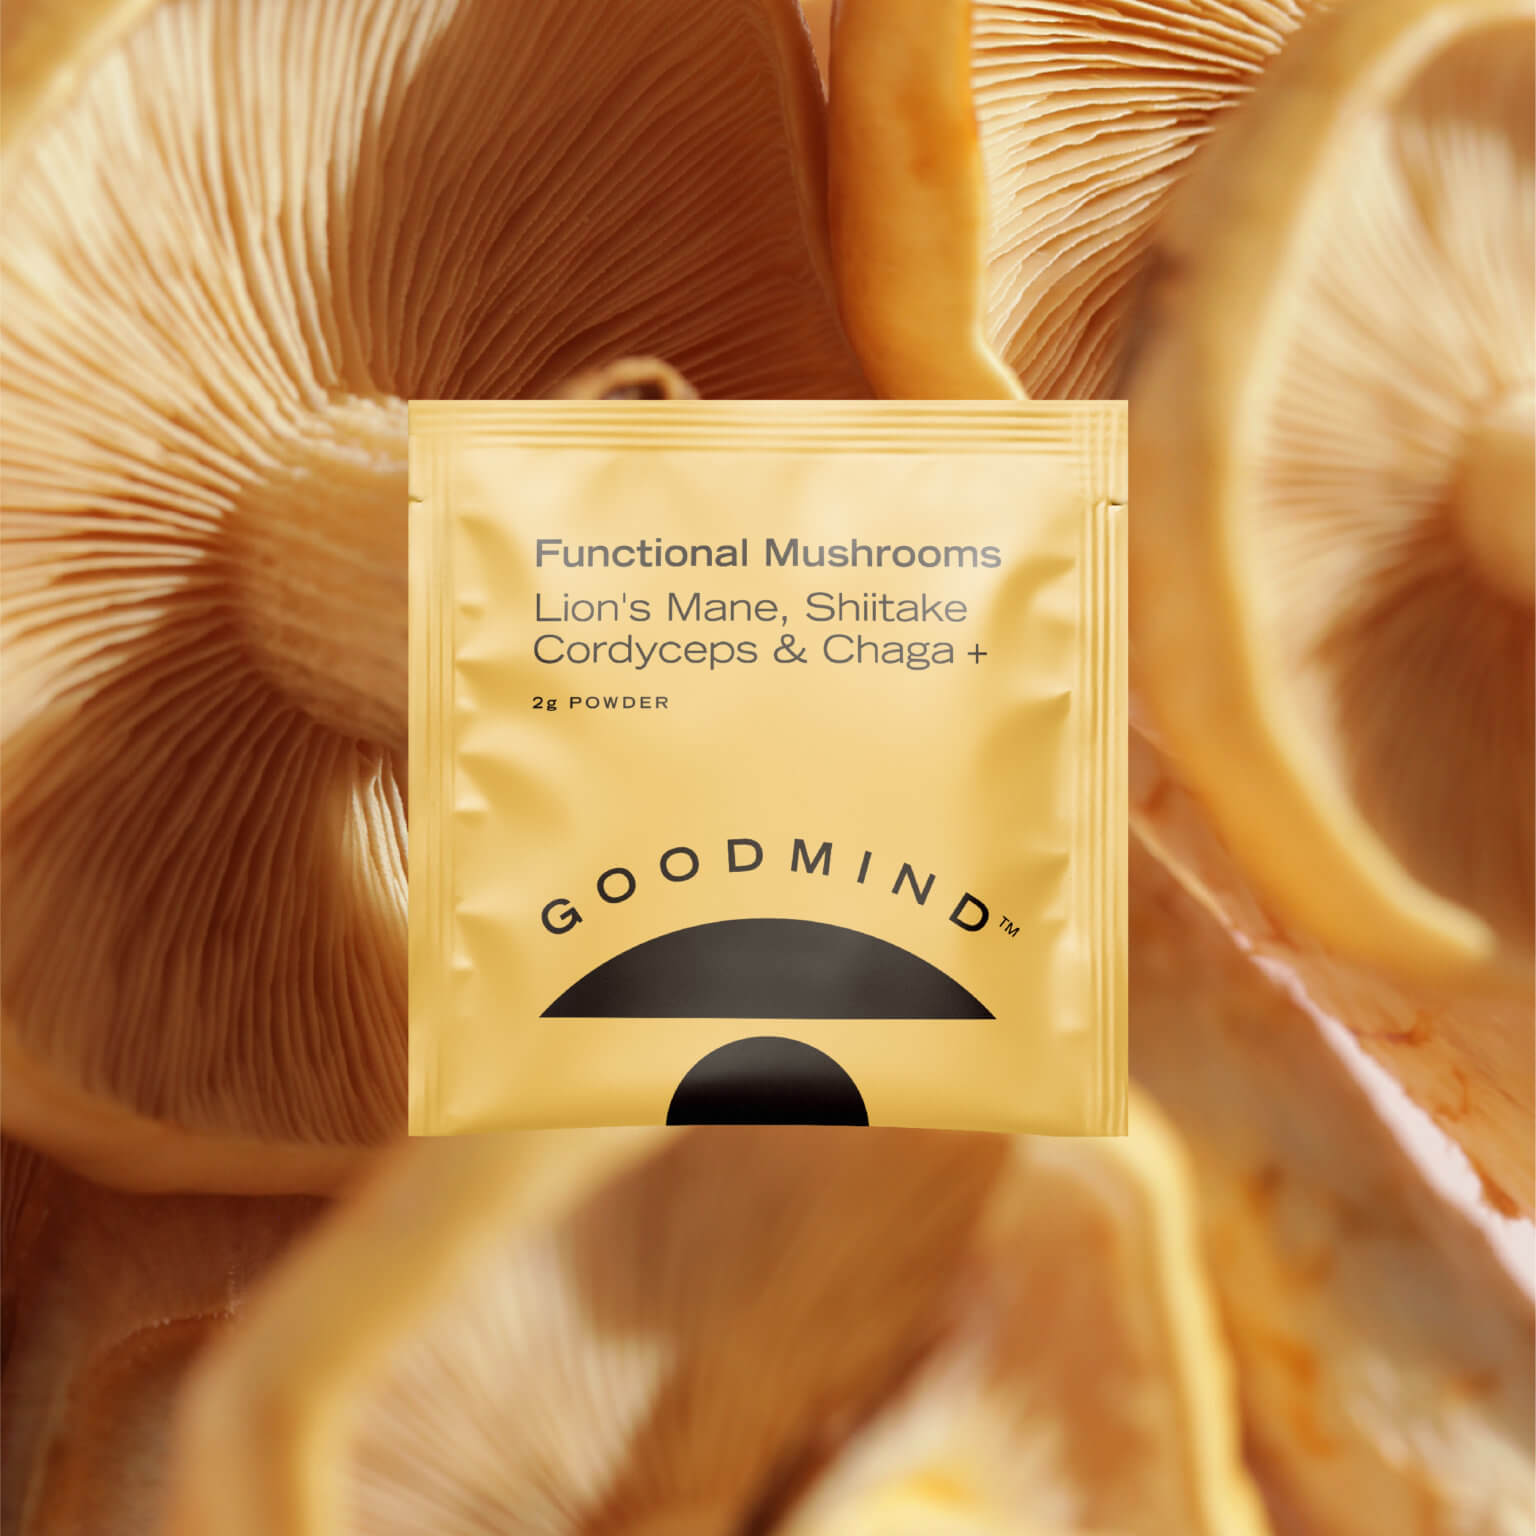 Goodmind™’s functional mushroom powder sachet